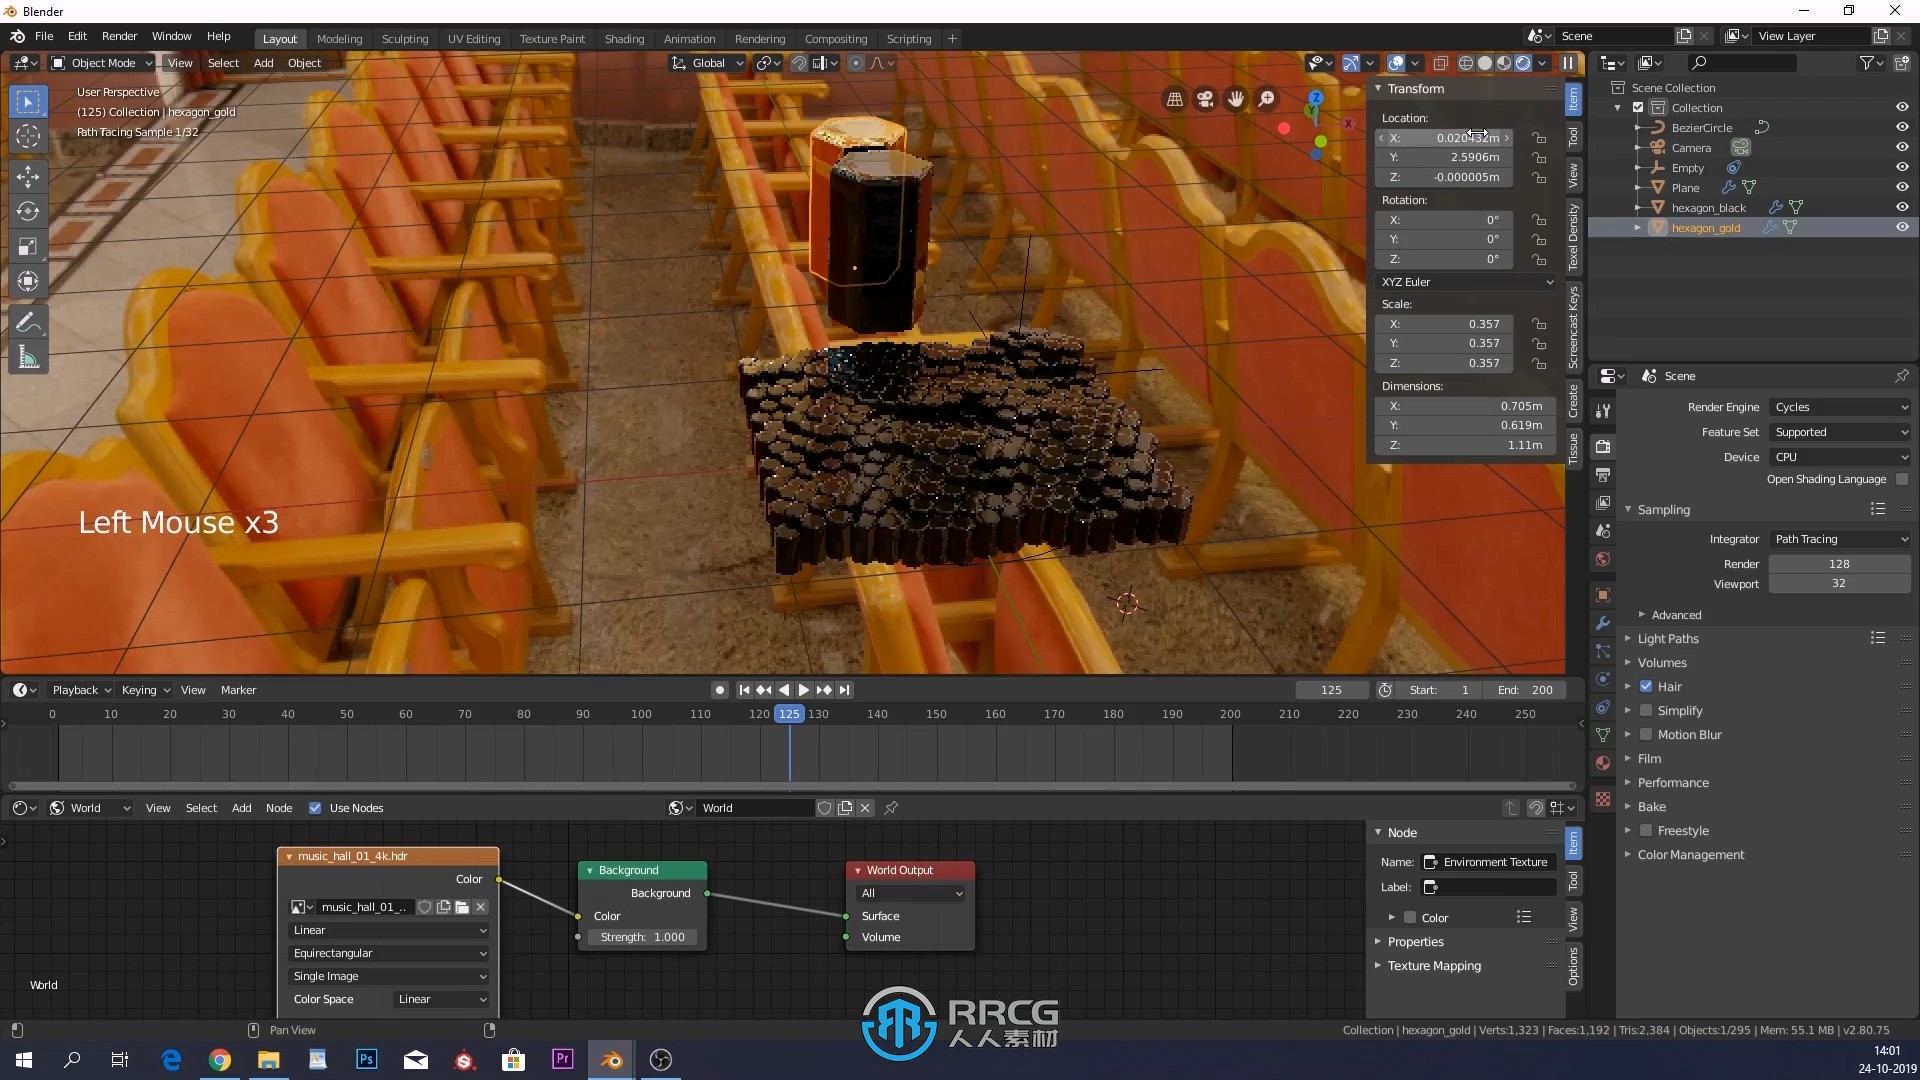 Blender超实用动画短片实例制作训练视频教程